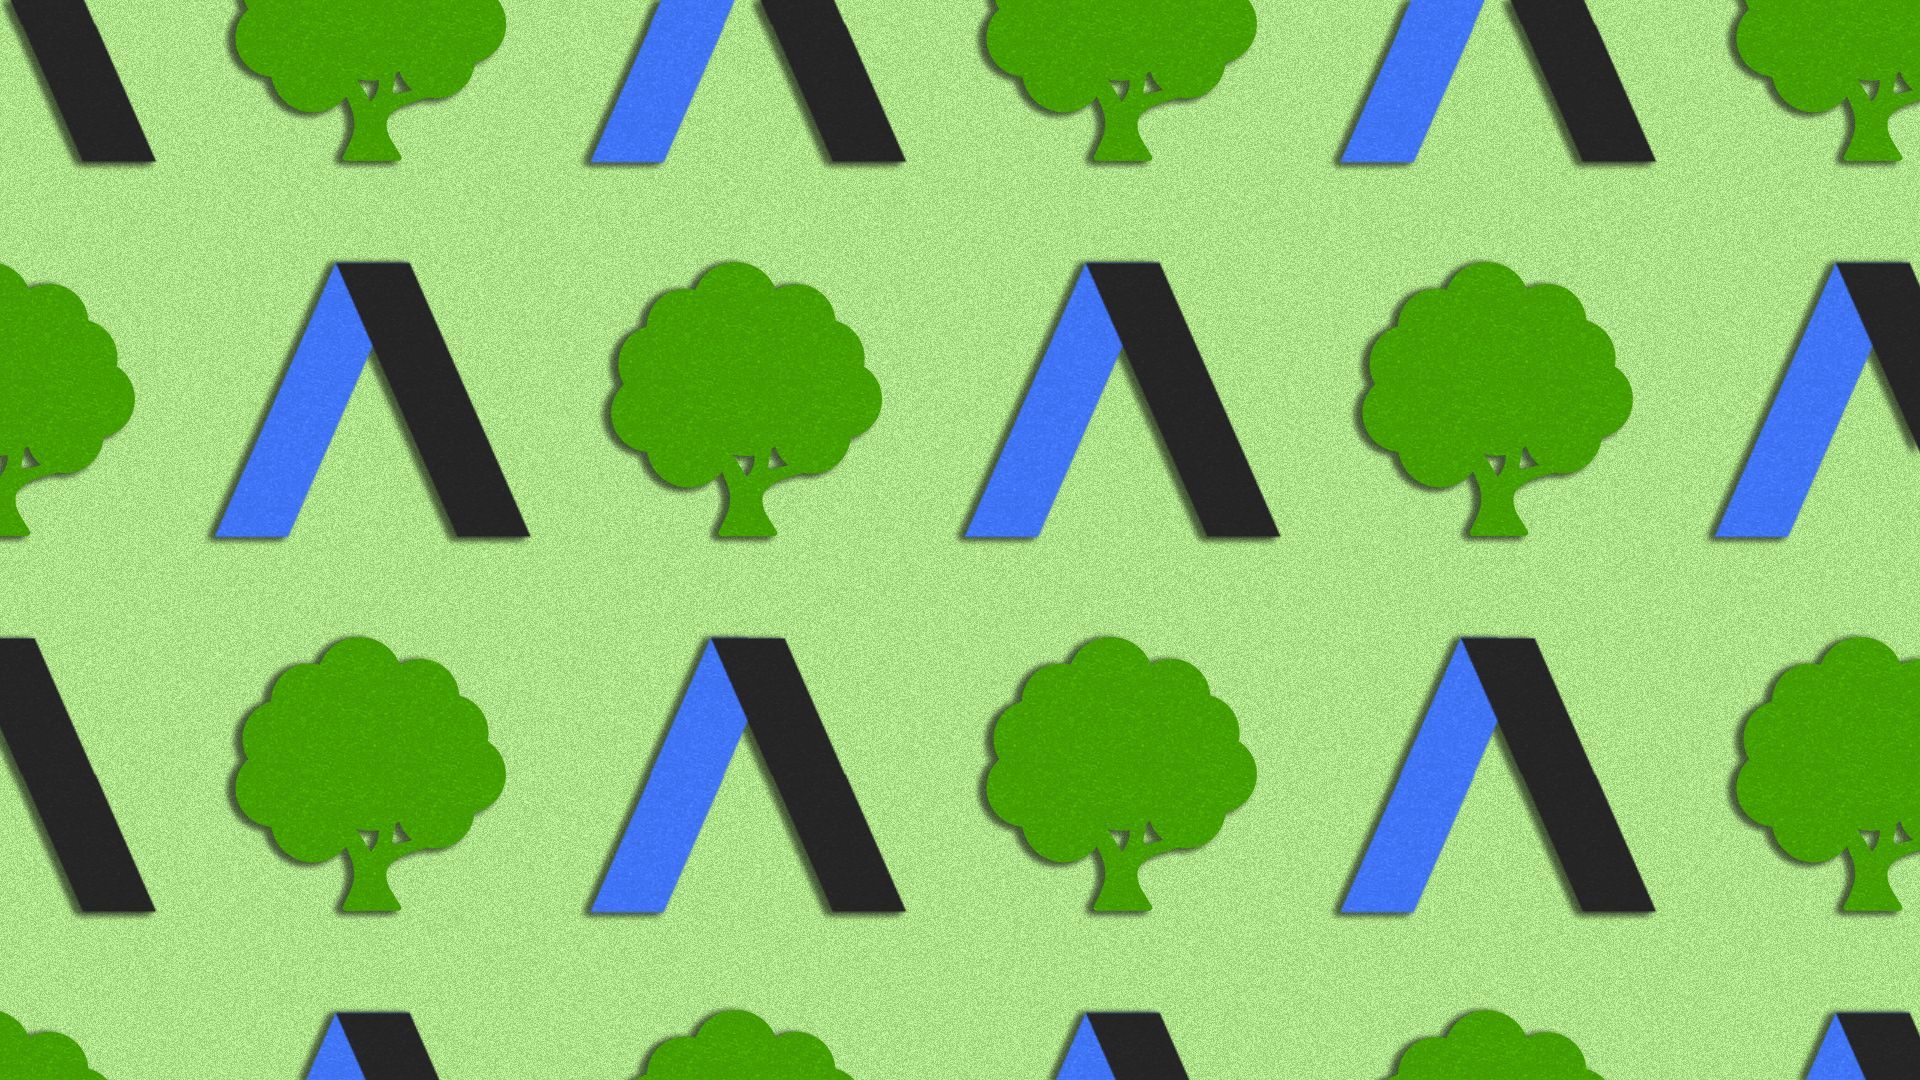 an illustration of repeating Axios logos and green trees